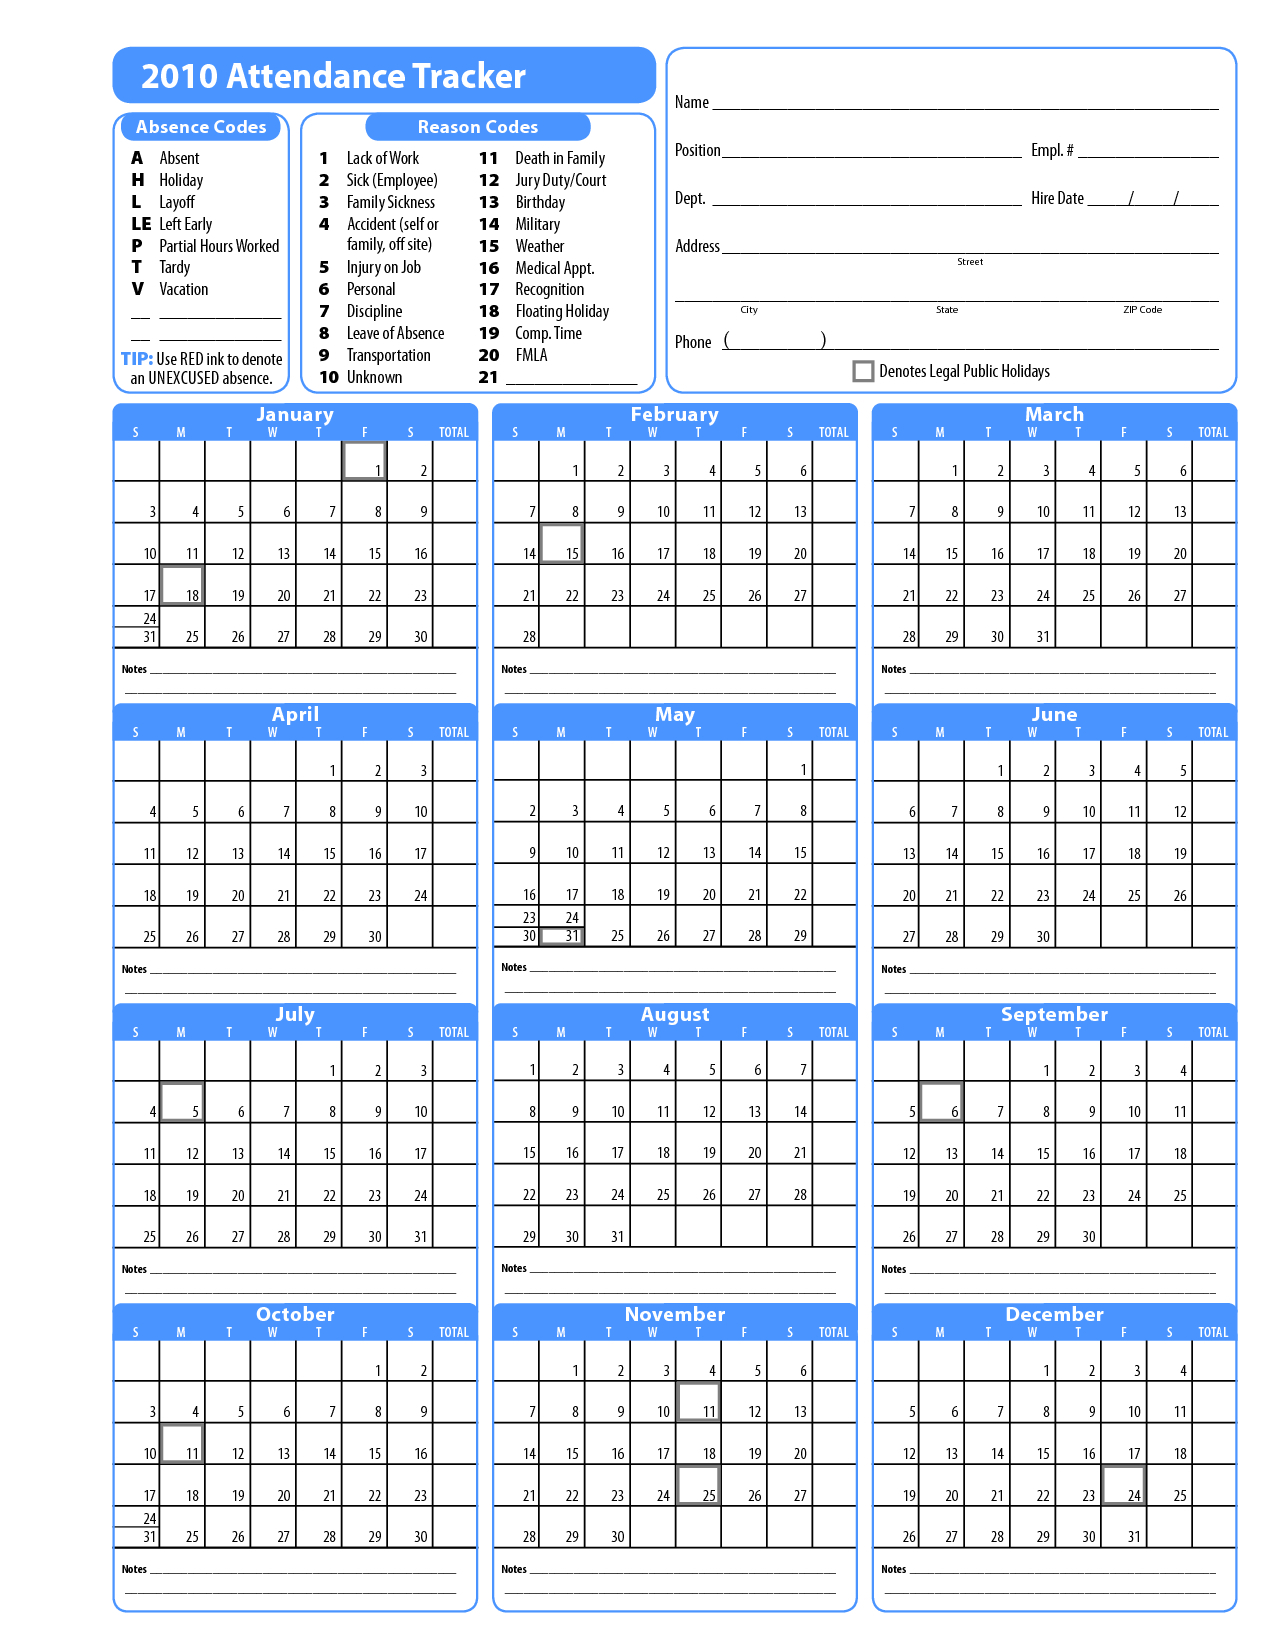 Catch 2020 Employee Attendance Calendar Printable within Google Calendar Vacation Tracking